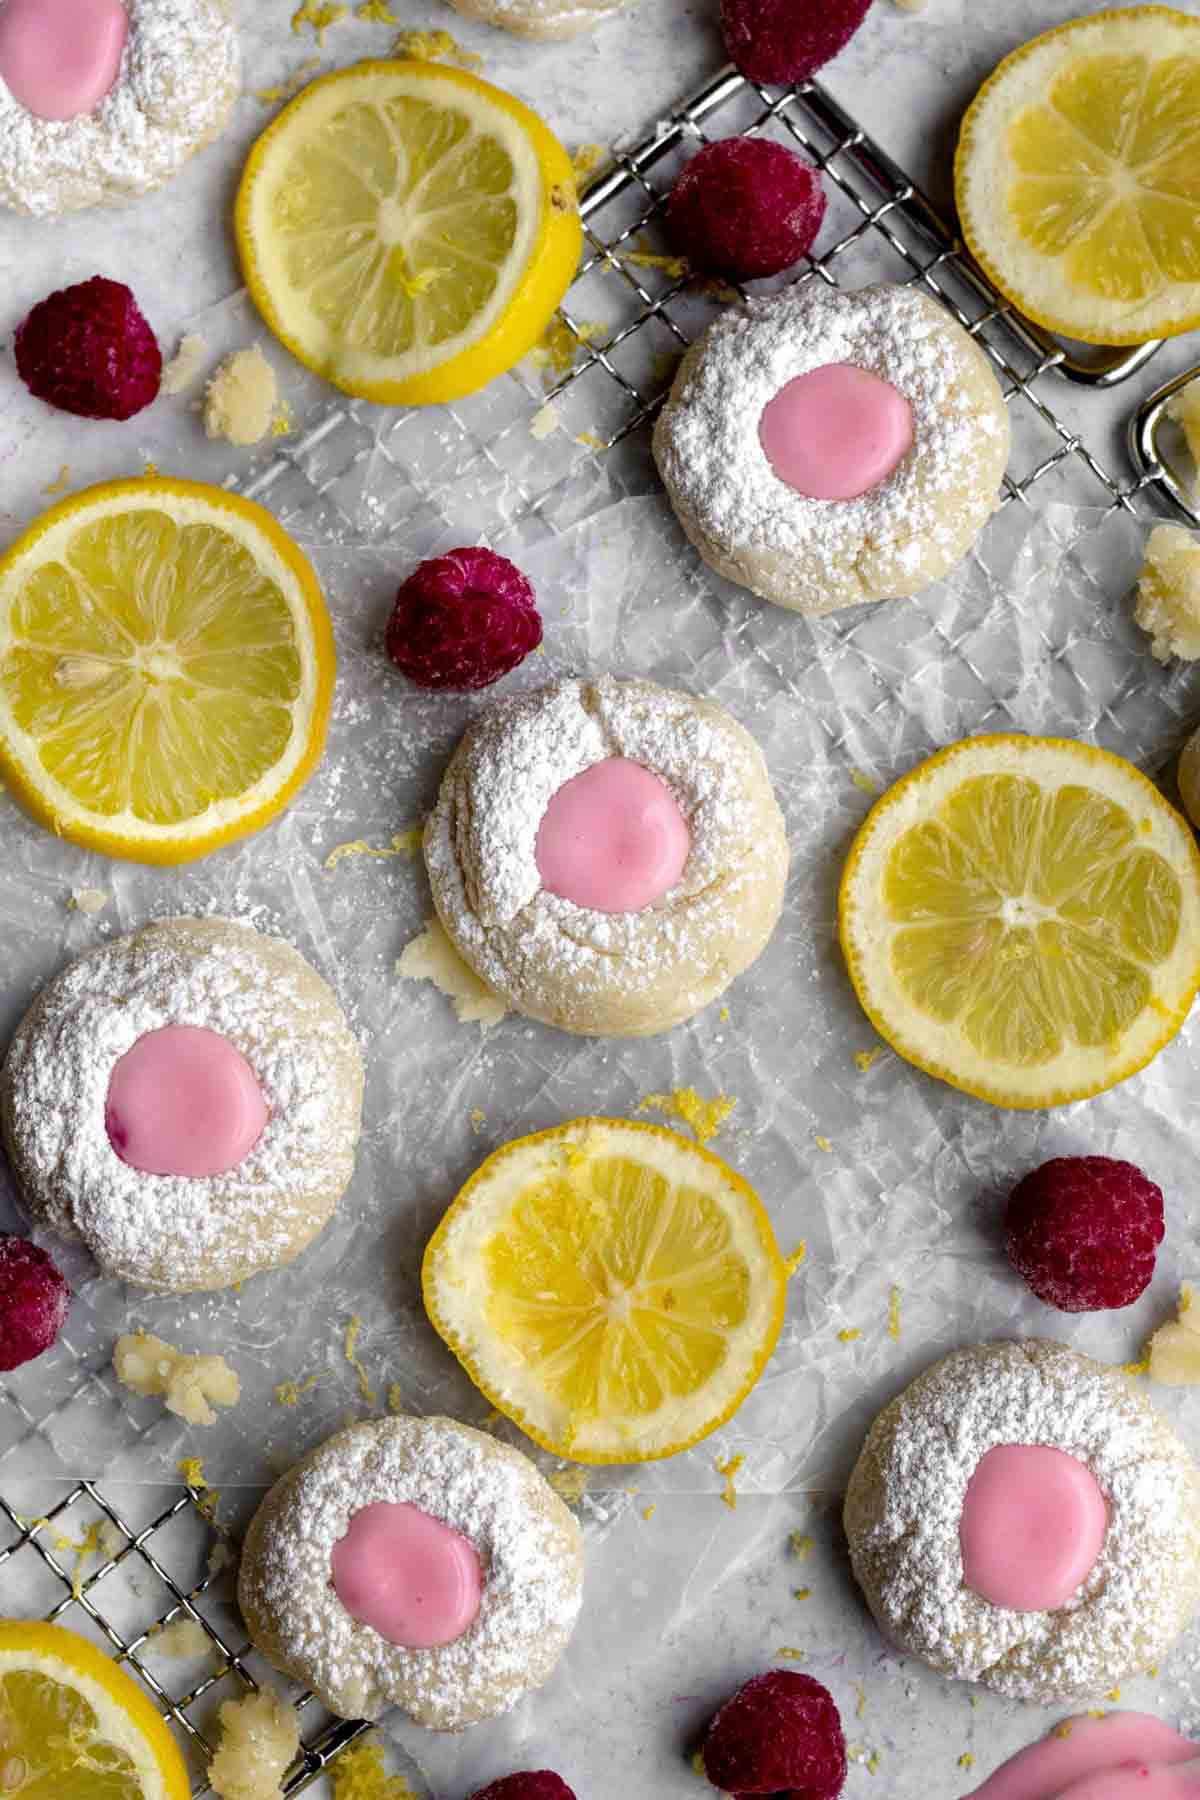 Raspberry Lemonade Cookies with fresh raspberries and round lemon slices.